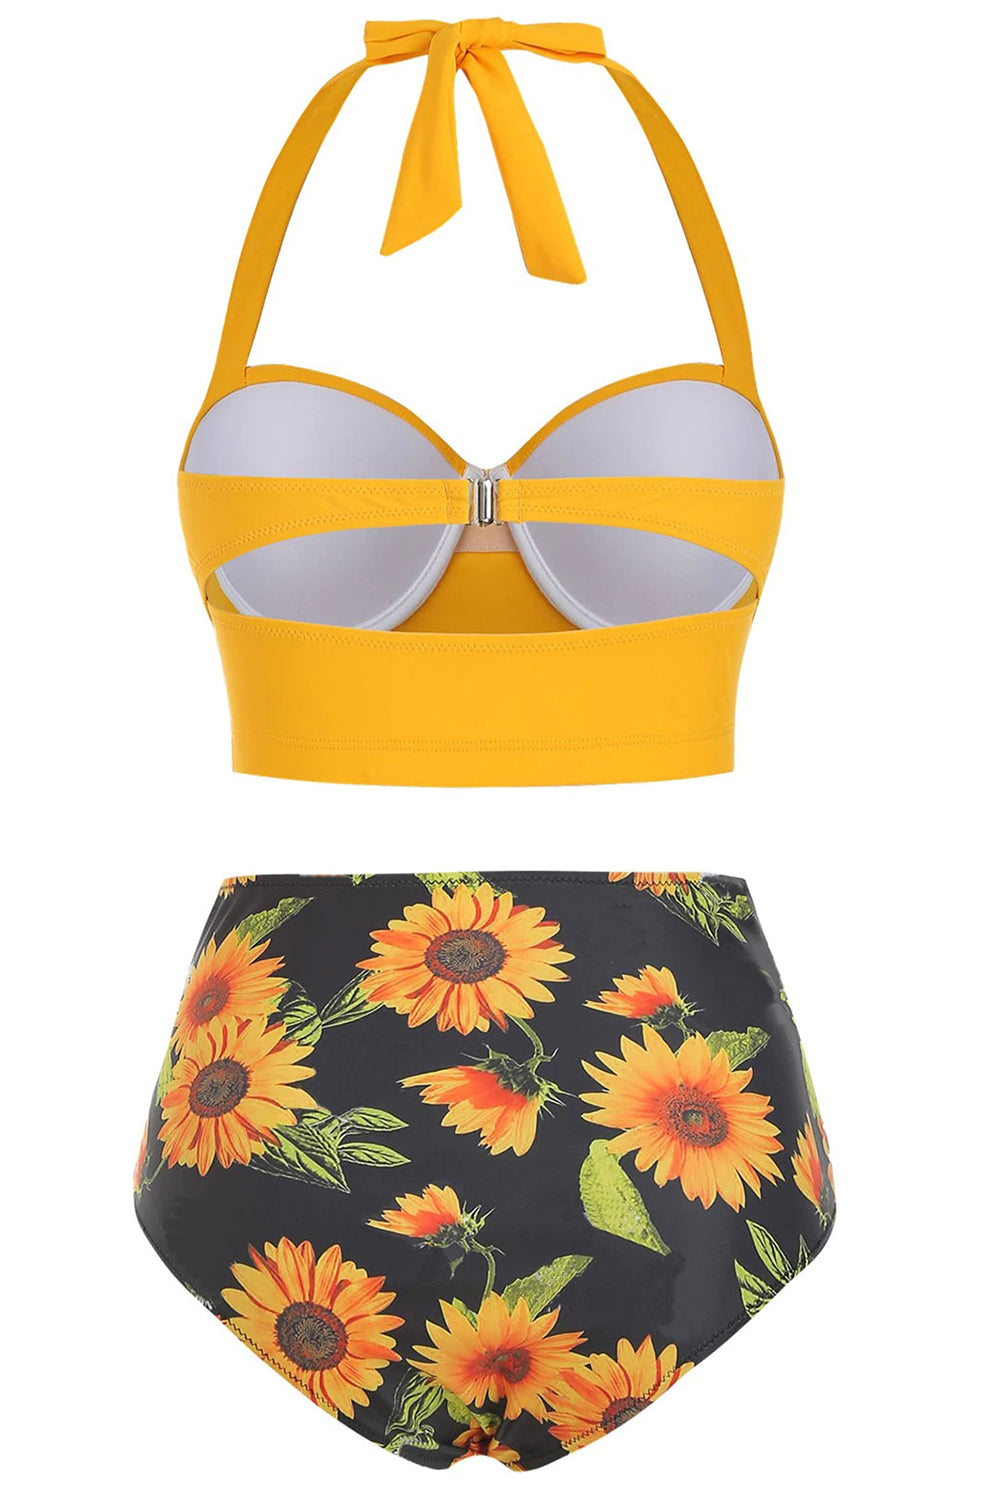 Sunflower Print Ruched Halter Bikini Swimsuit